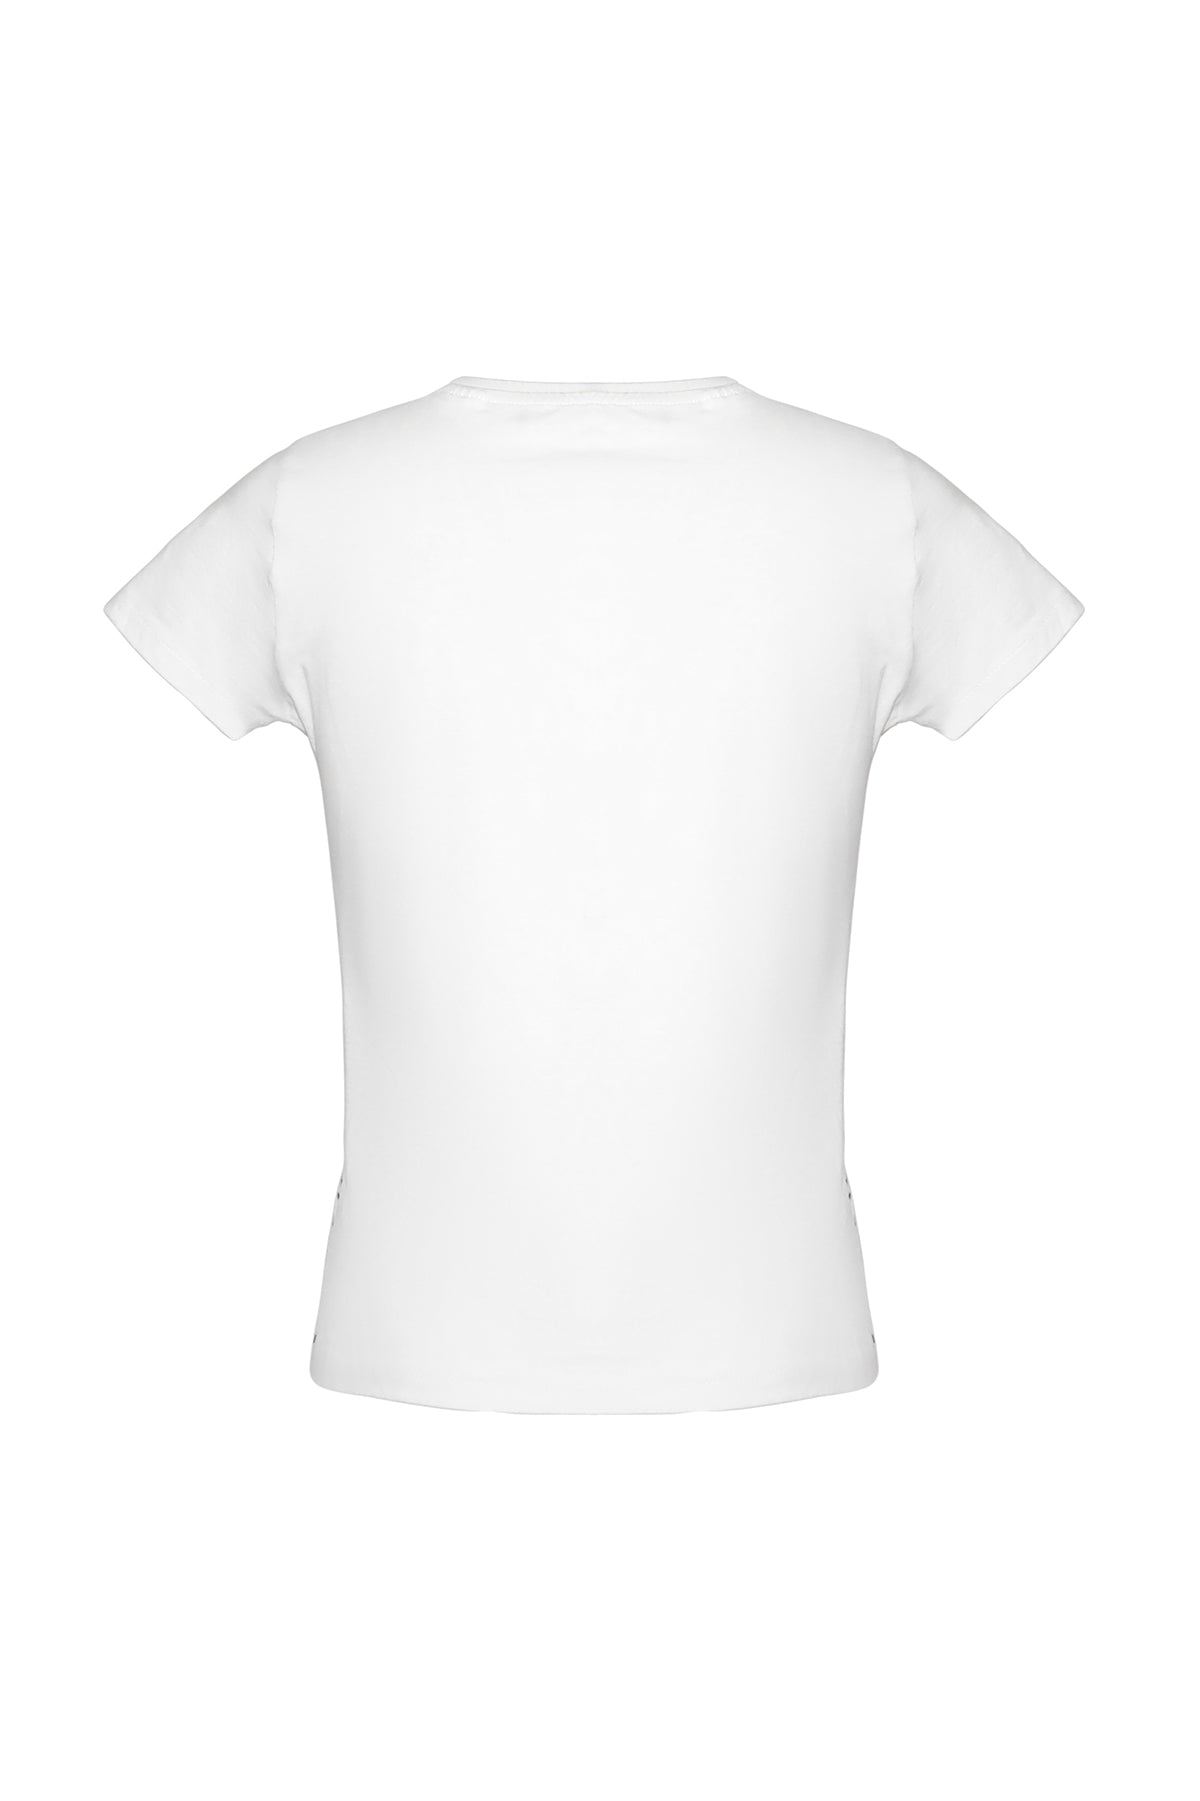 Armine Ohanyan graphic t-shirt Aoki back view